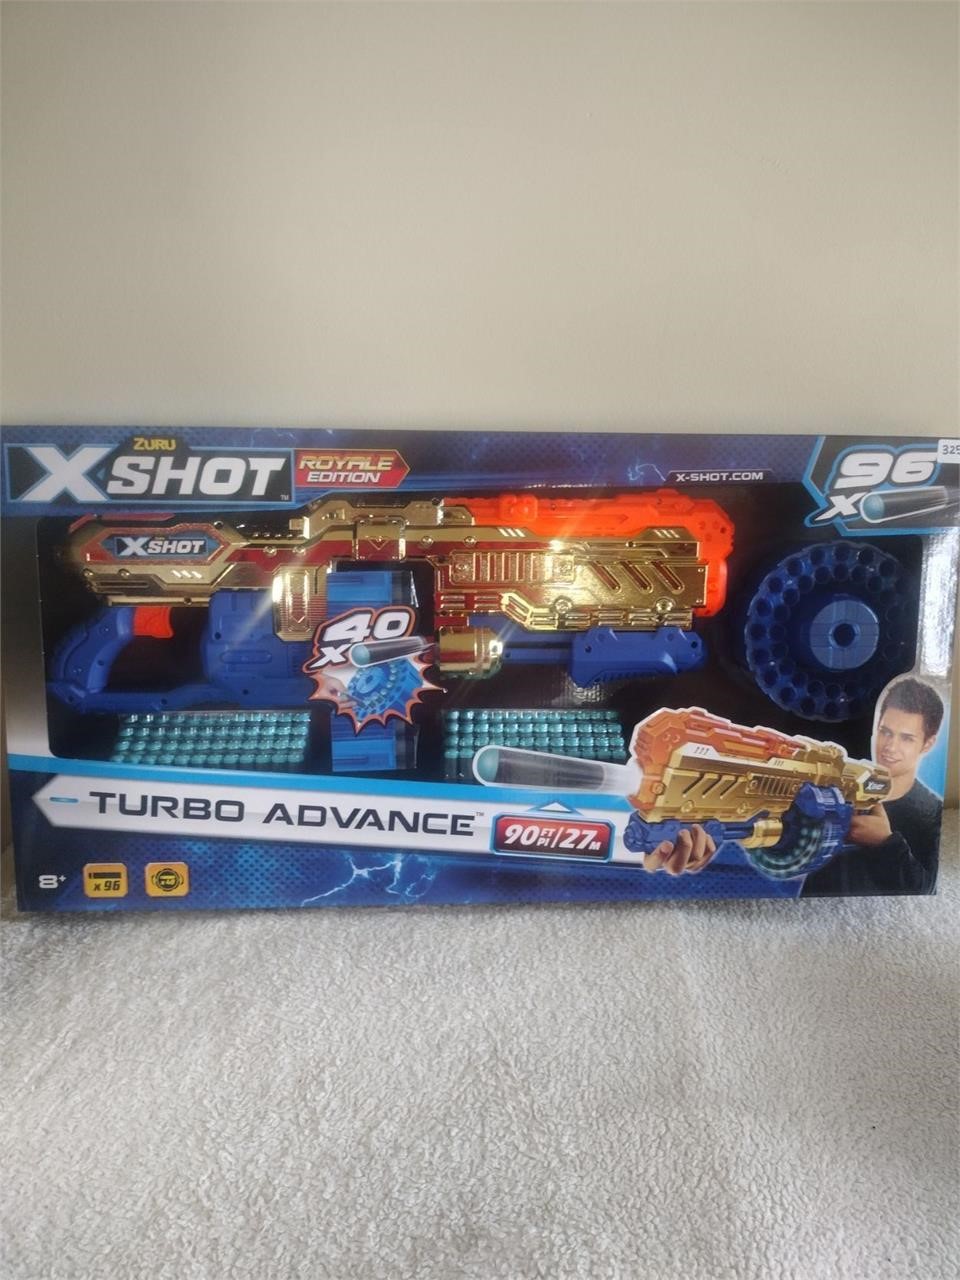 X-Shot Royale Edition Golden Turbo Advance